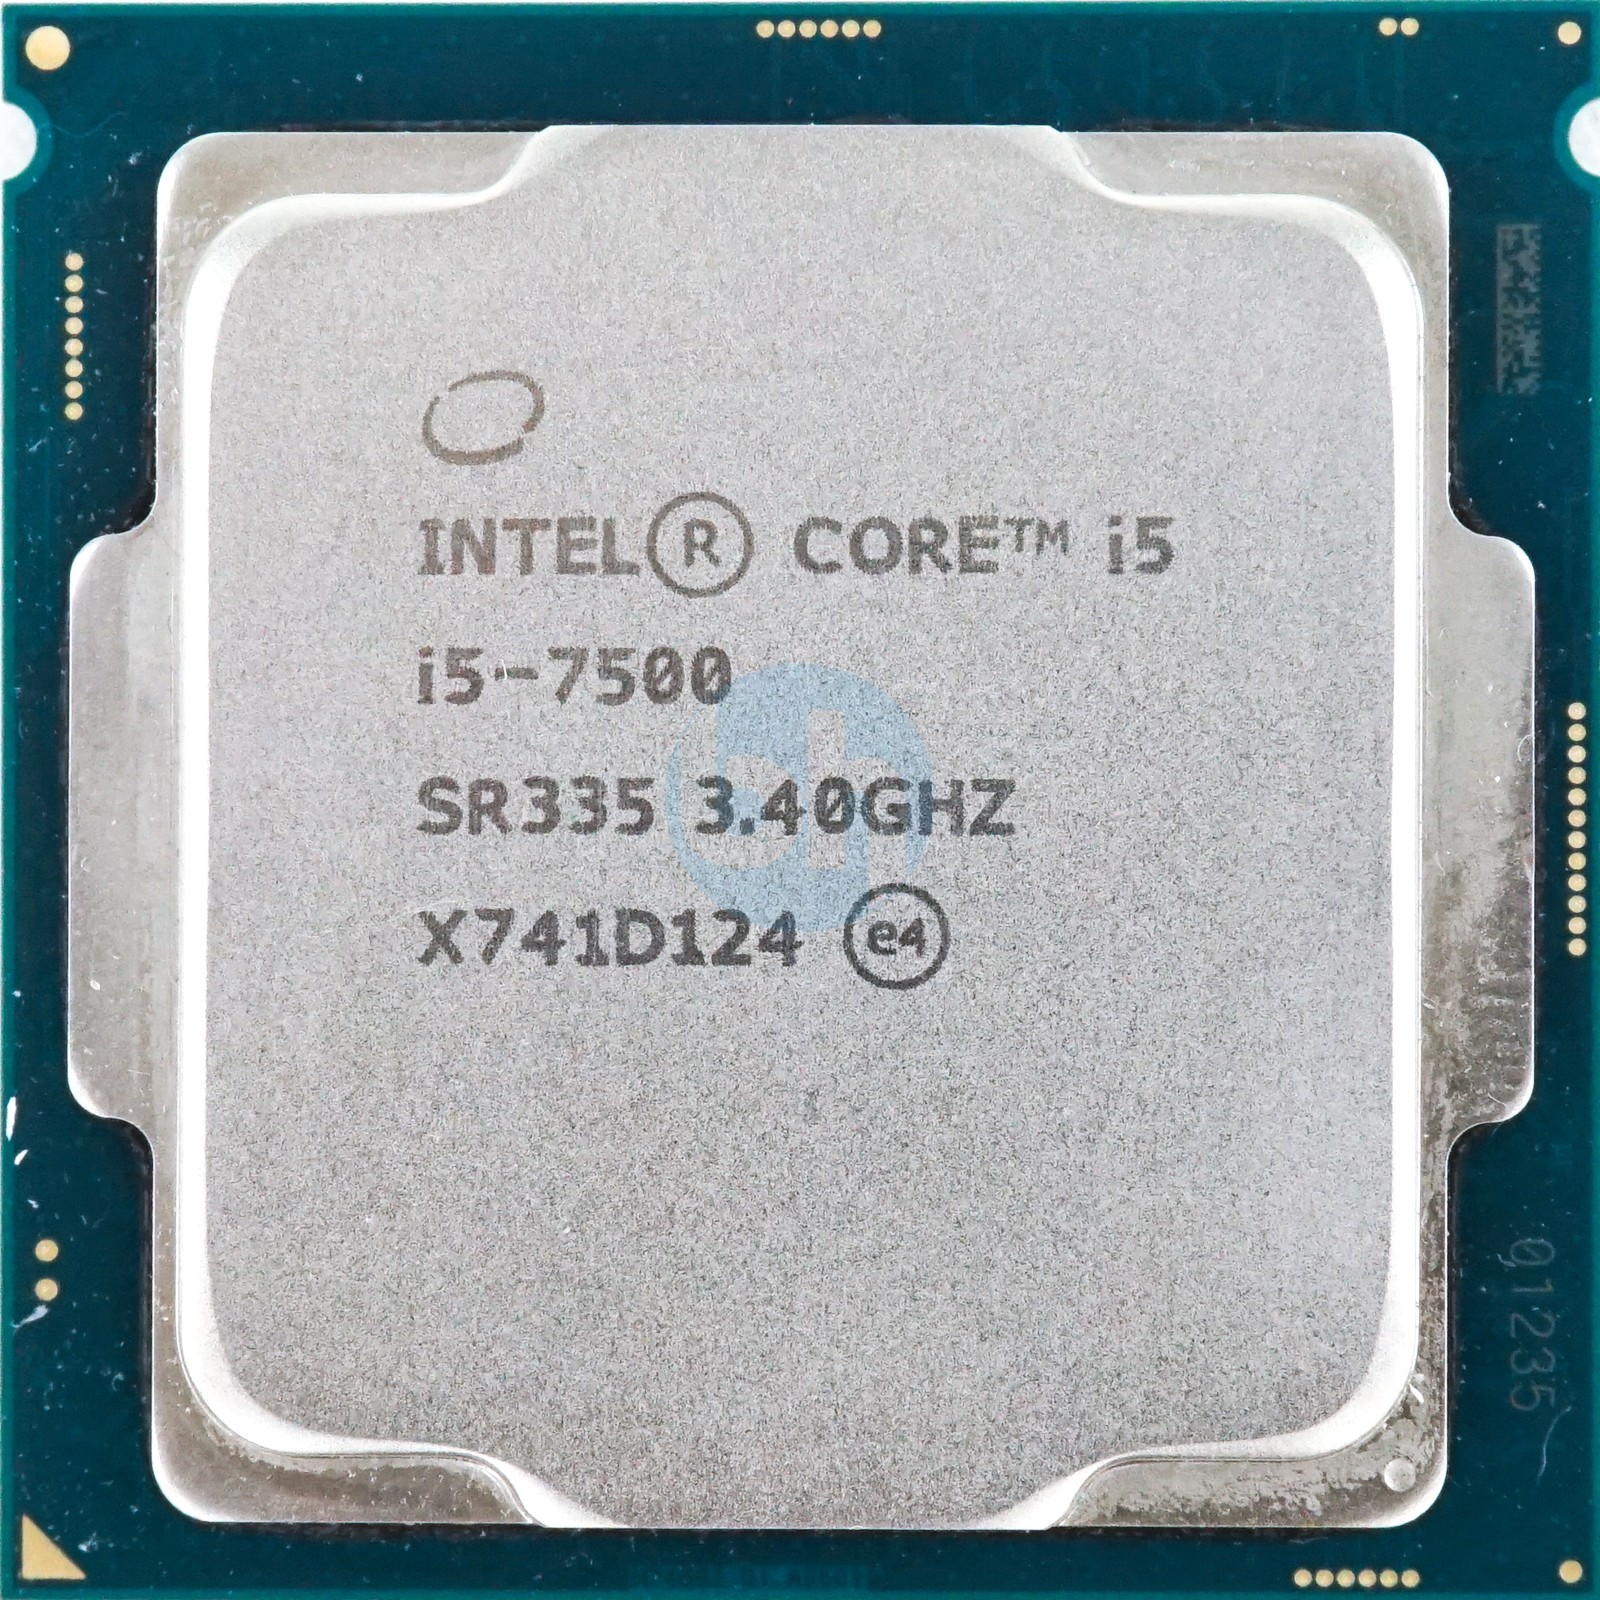 PCパーツcore i5 7500 intel CPU